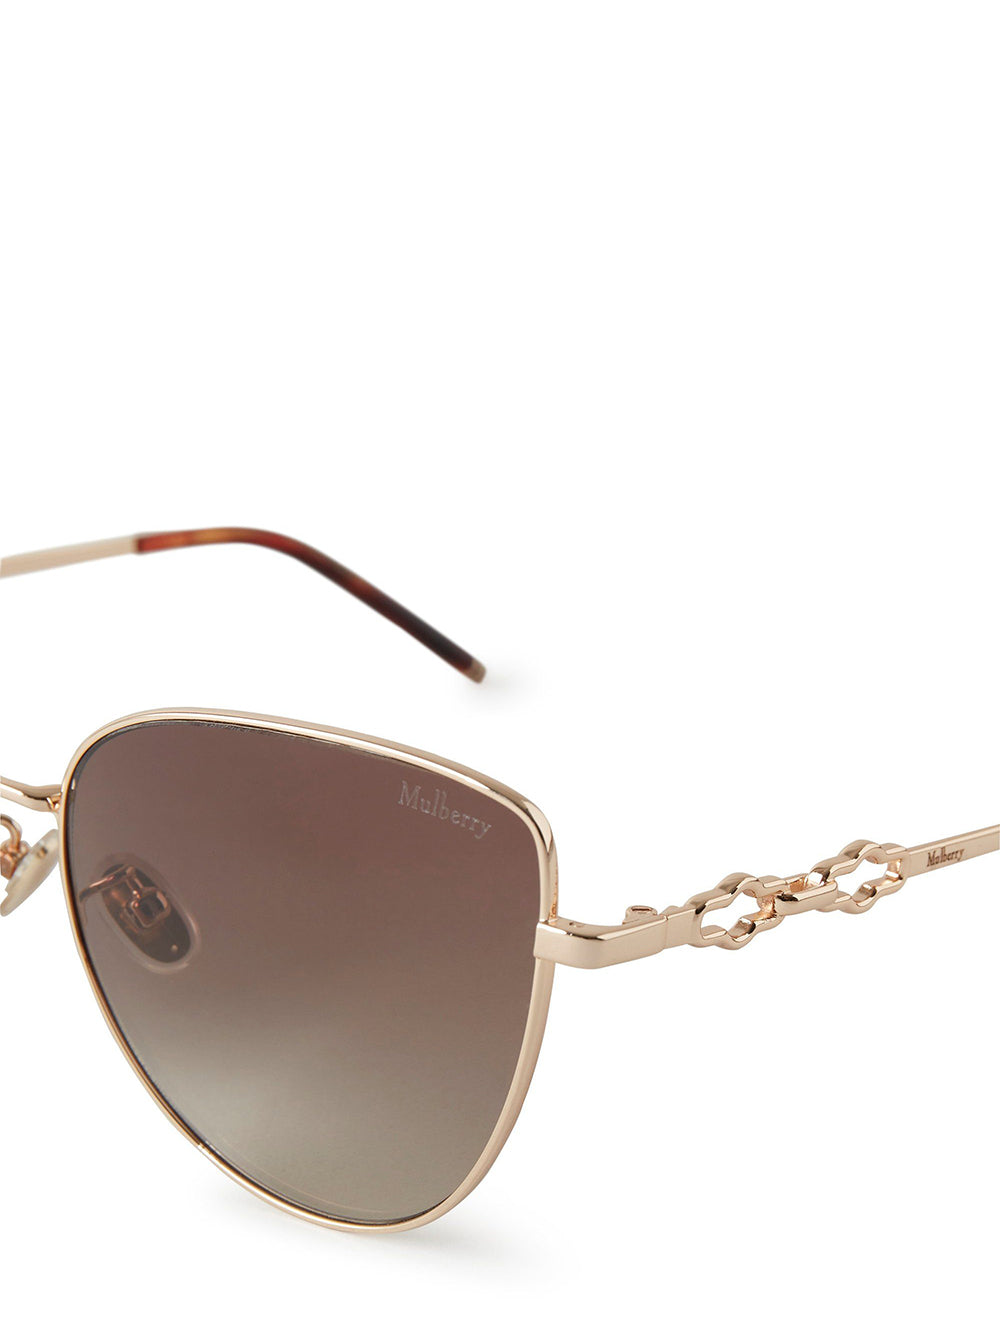 Maisie Sunglasses (Gold & Brown)